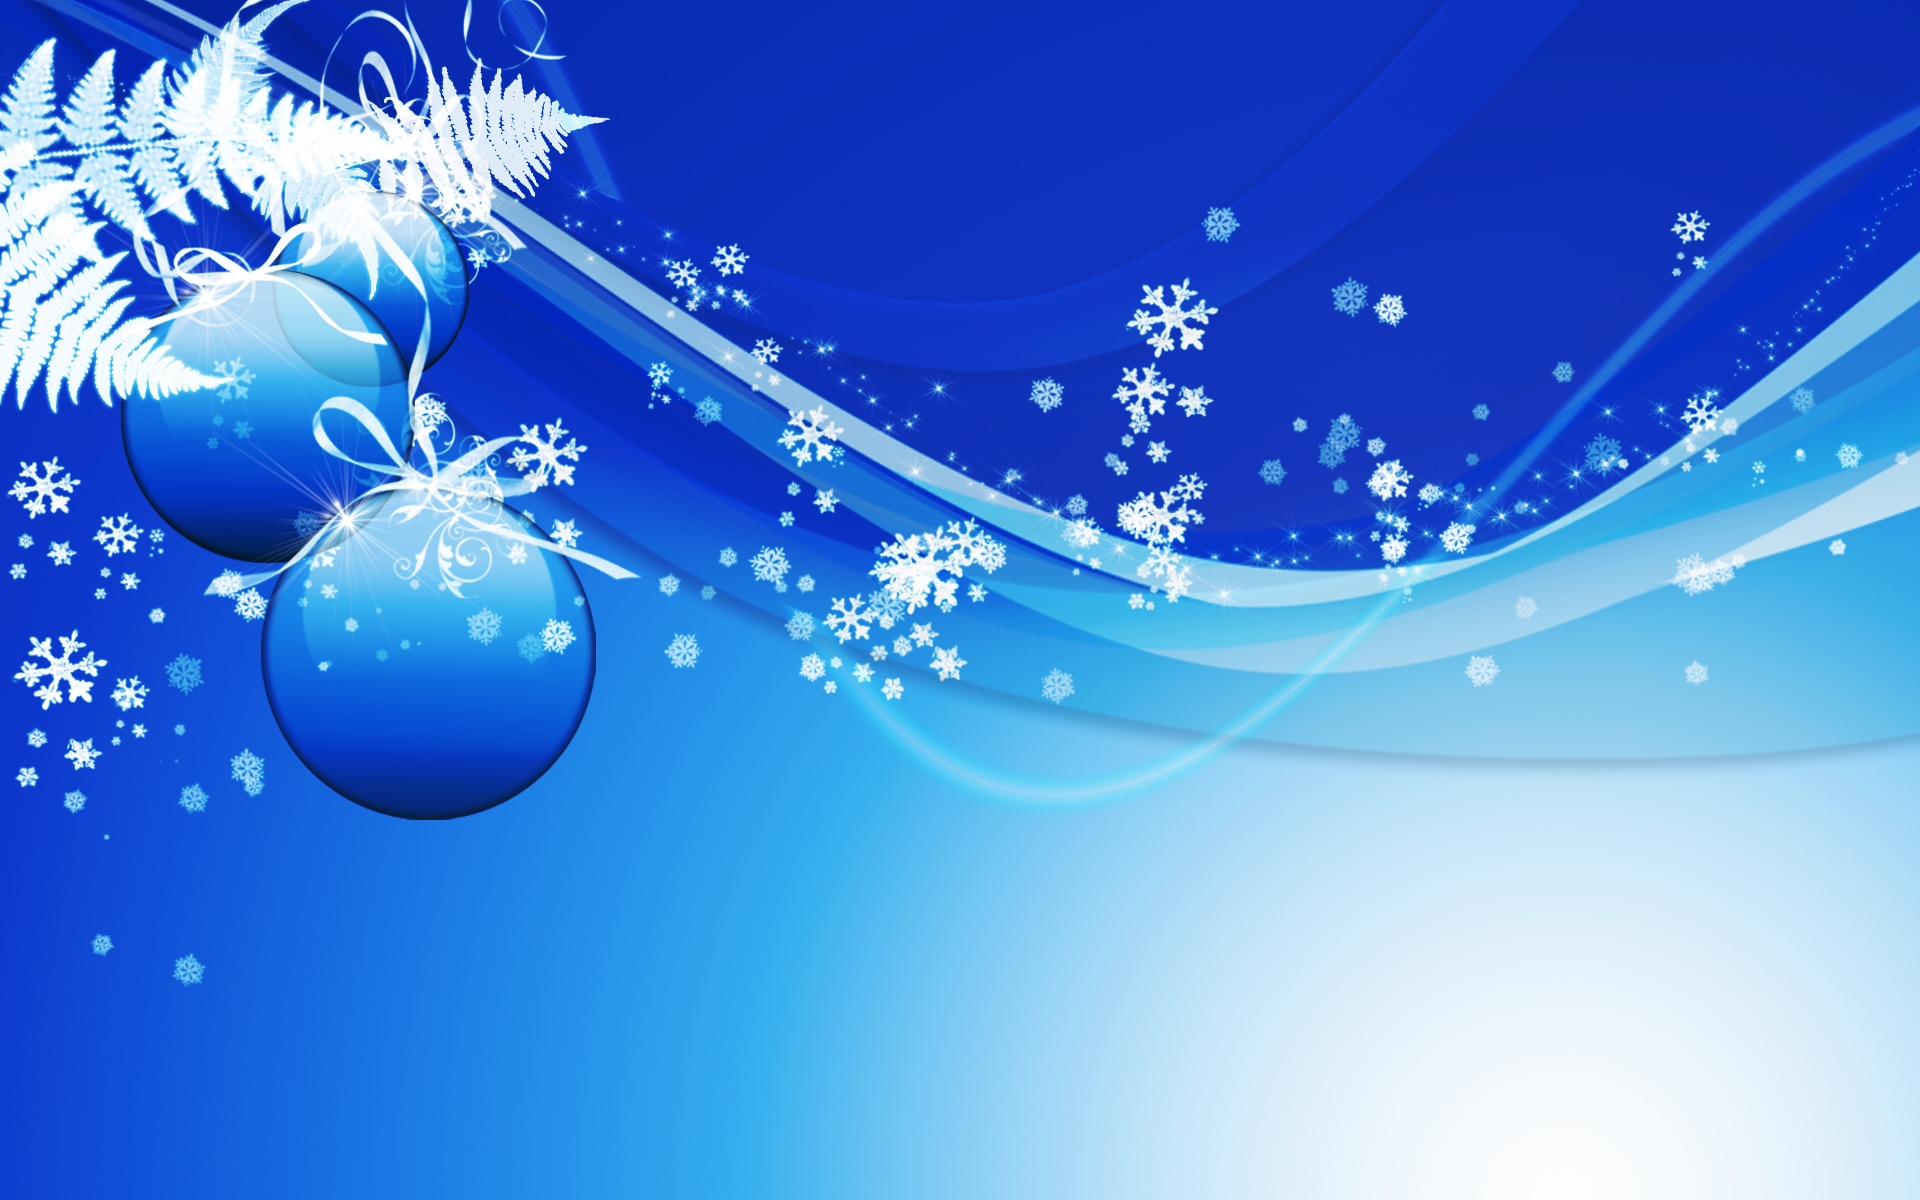 Blue Christmas ornaments on a festive desktop wallpaper.